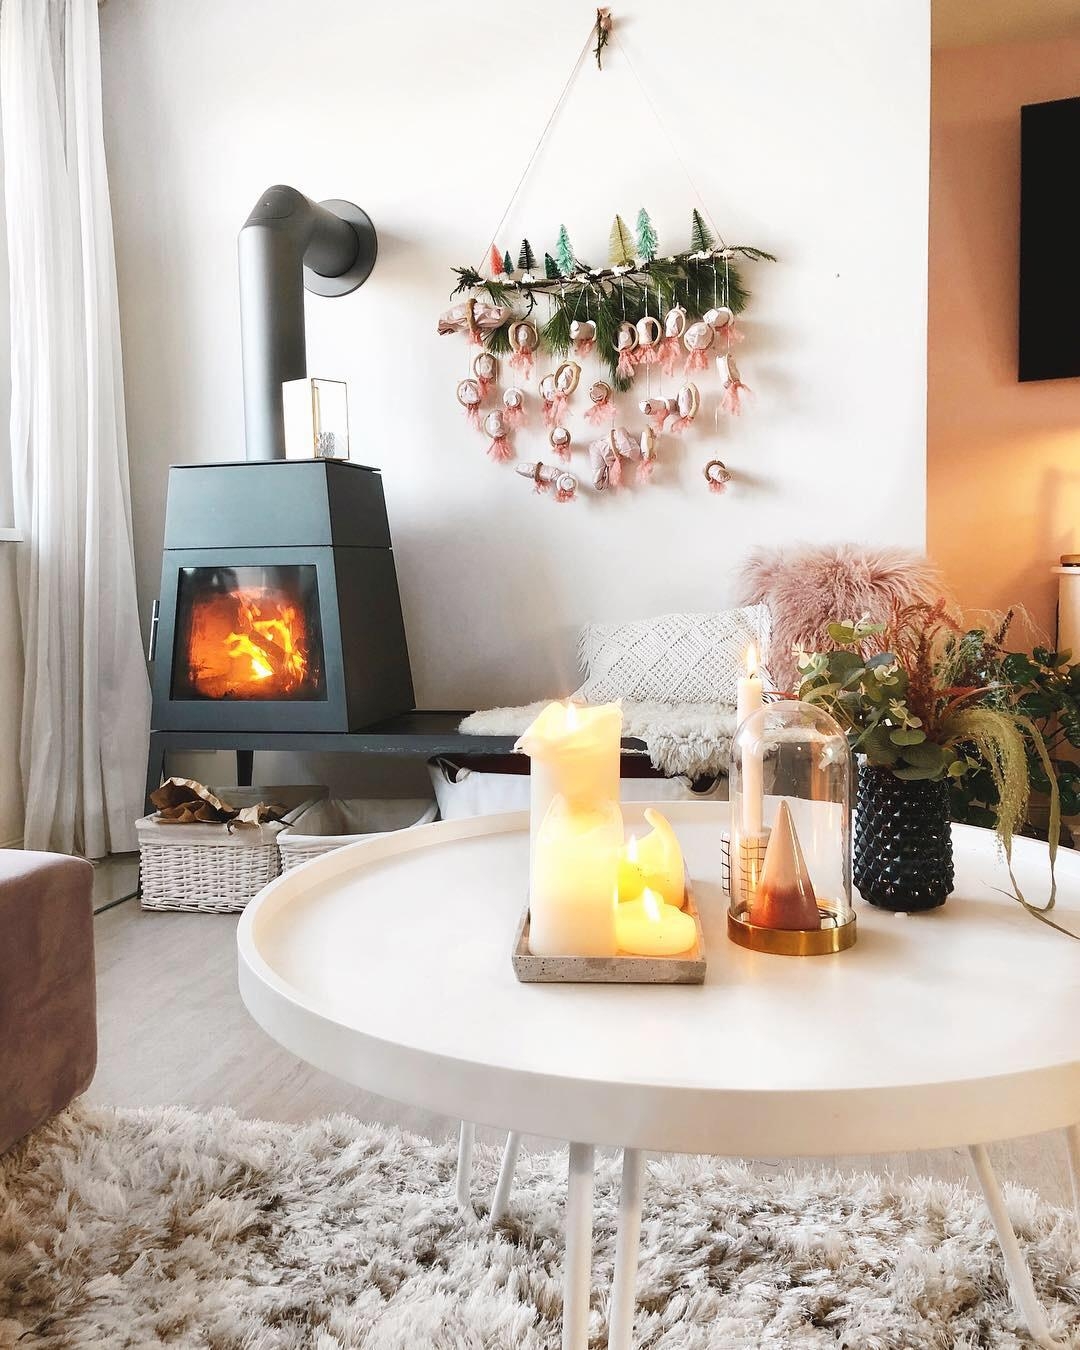 New Diy #adventskalender #couchmagazin #couchstyle #advent #kalender #basteln #livingroom #kamin #interior 